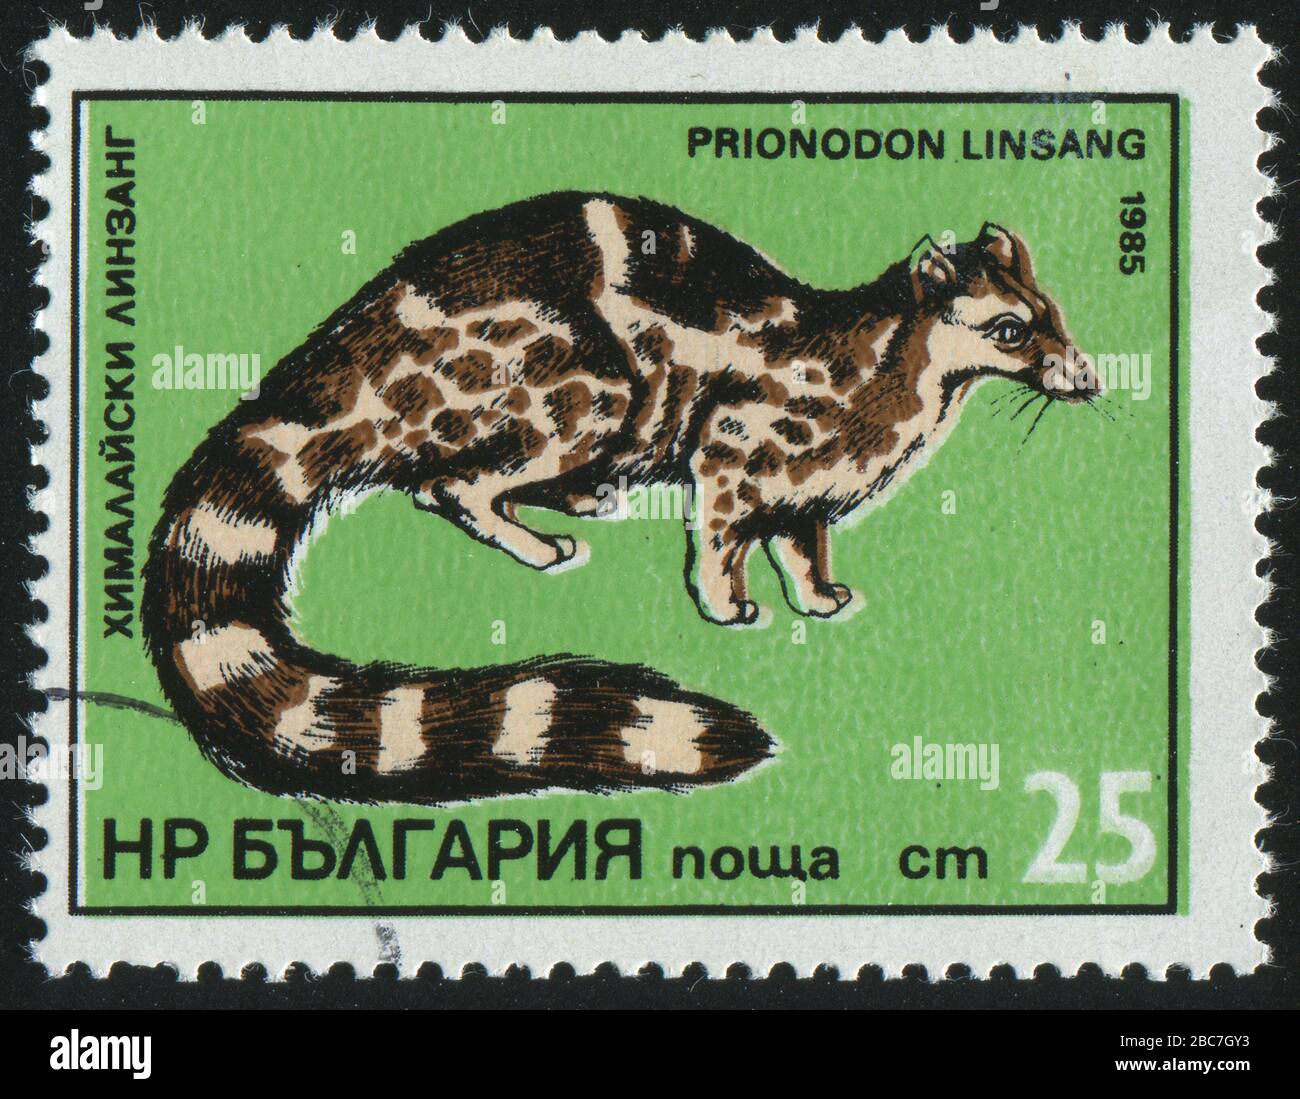 BULGARIA - CIRCA 1985: stamp printed by Bulgaria, shows Prionodon linsang, circa 1985. Stock Photo